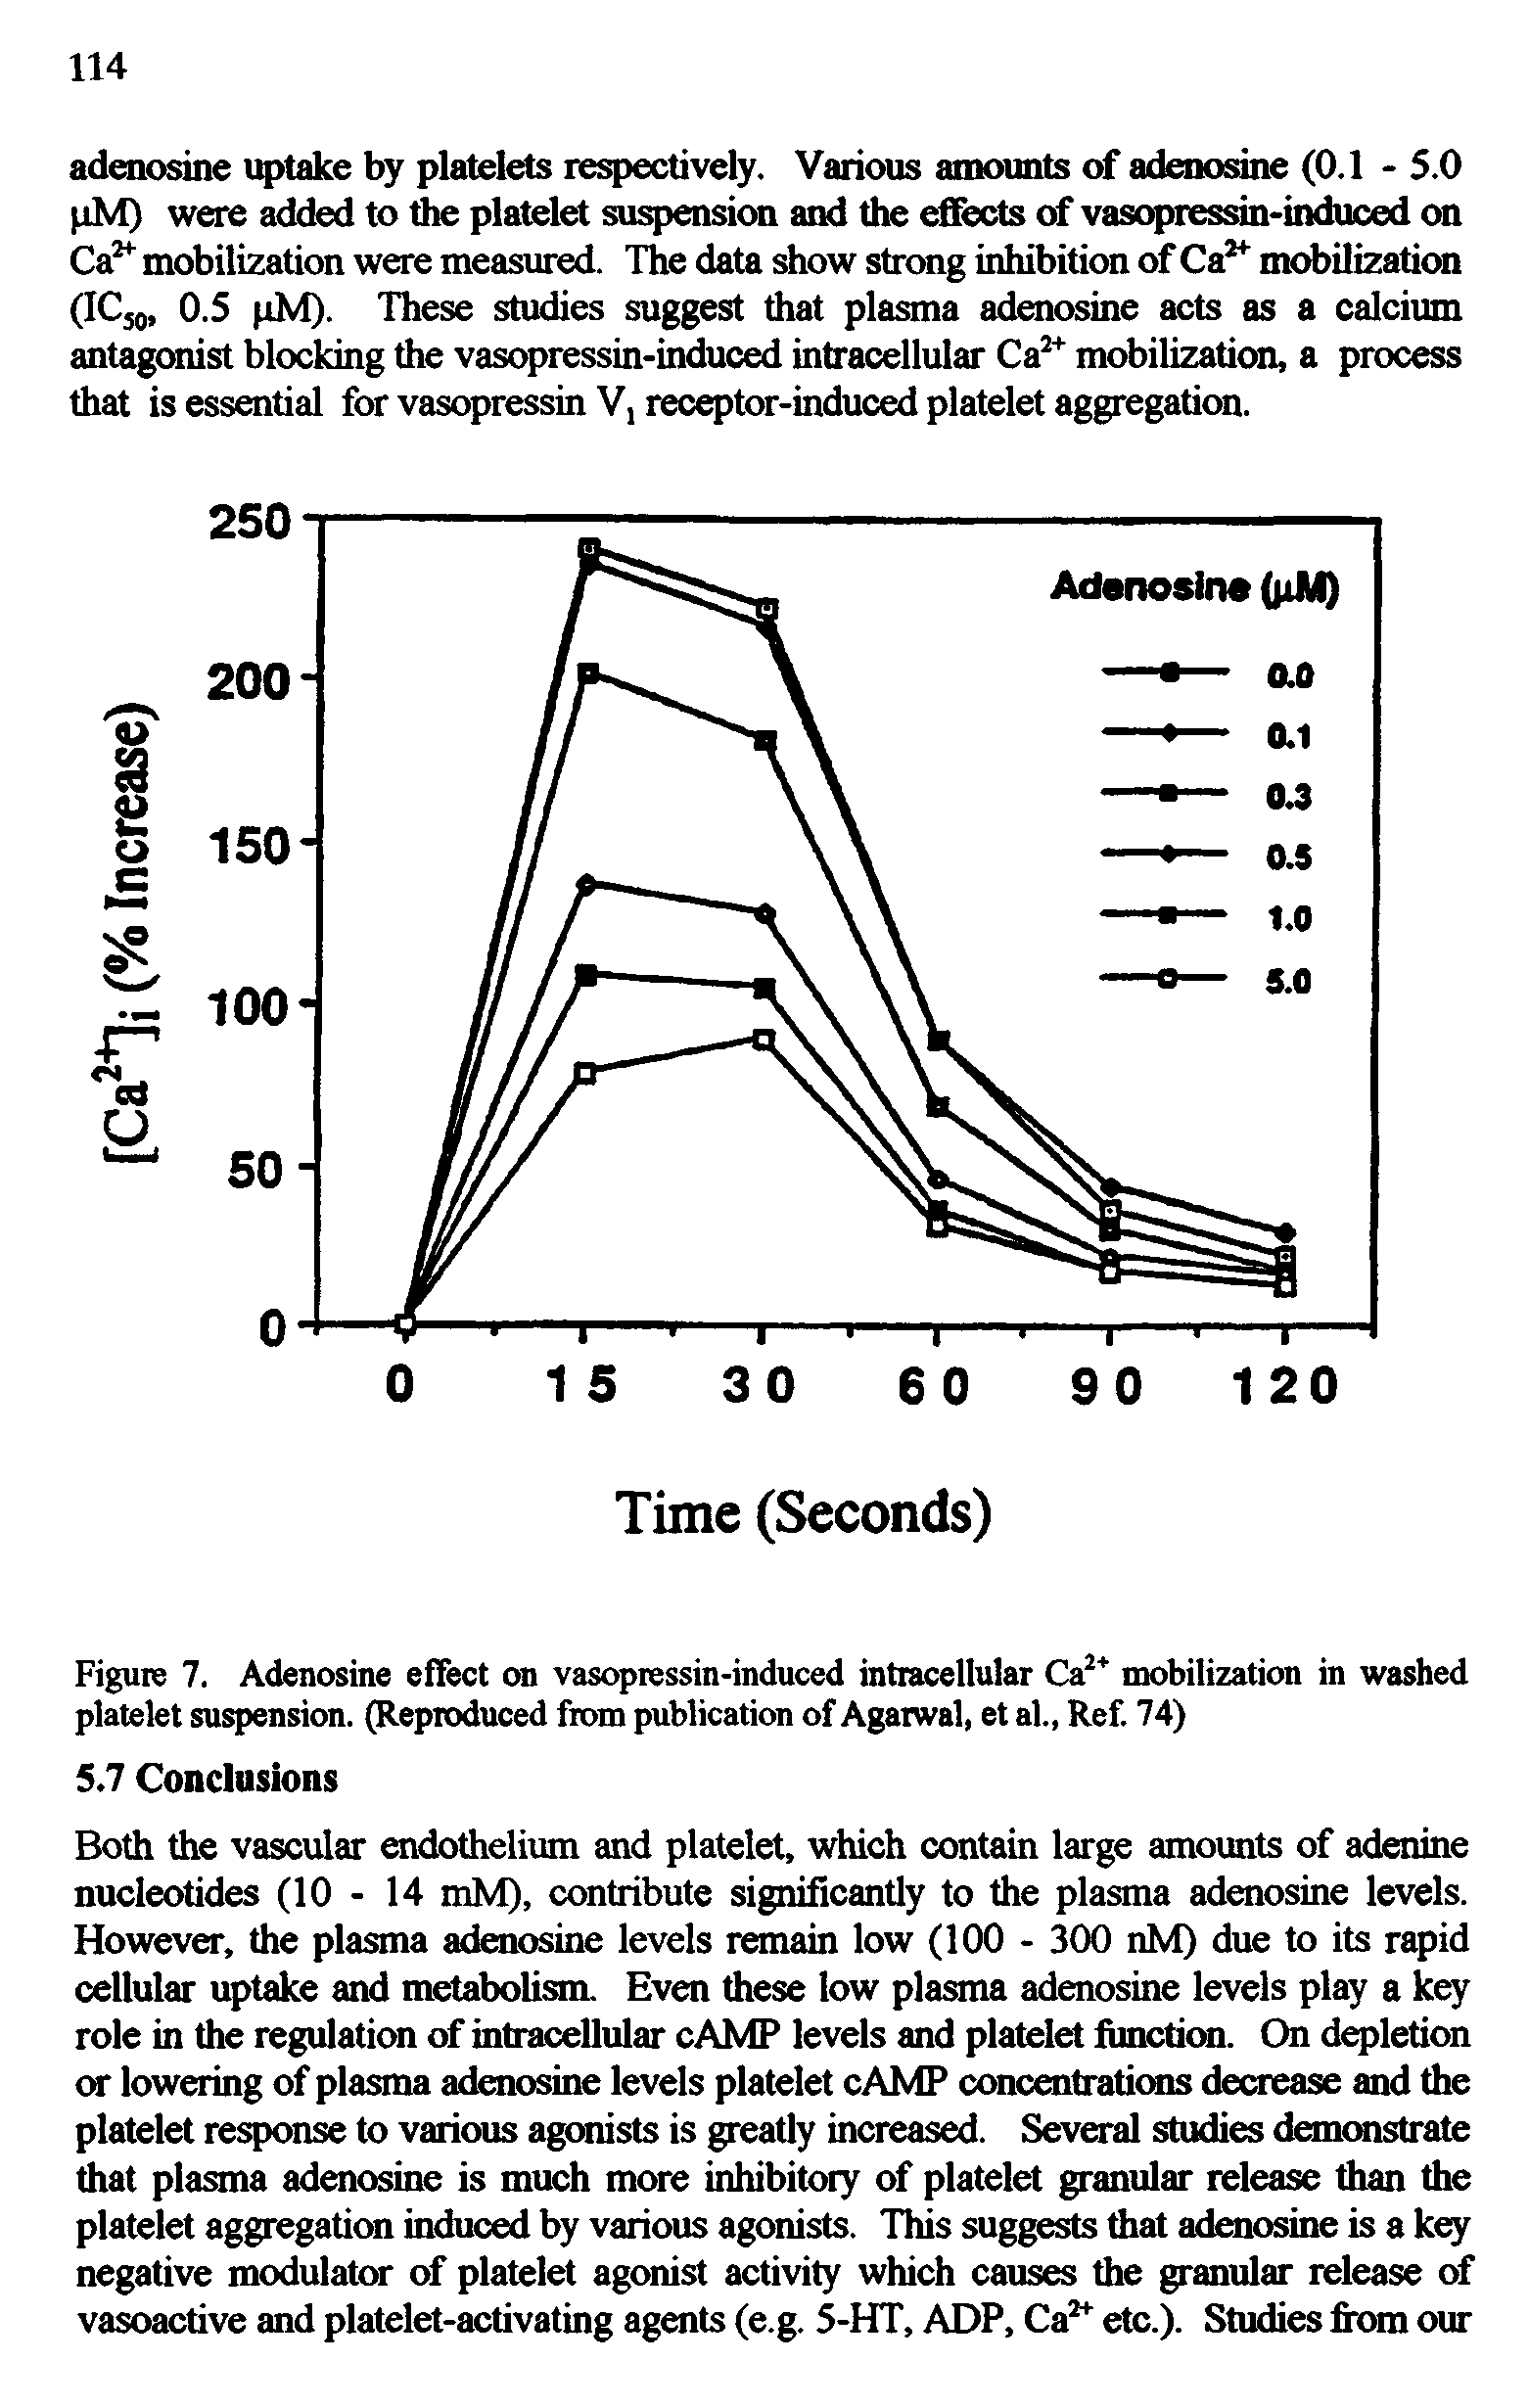 Figure 7. Adenosine effect on vasopressin-induced intracellular Ca mobilization in washed platelet suspension. (Reproduced from publication of Agatwal, et al., Ref. 74)...